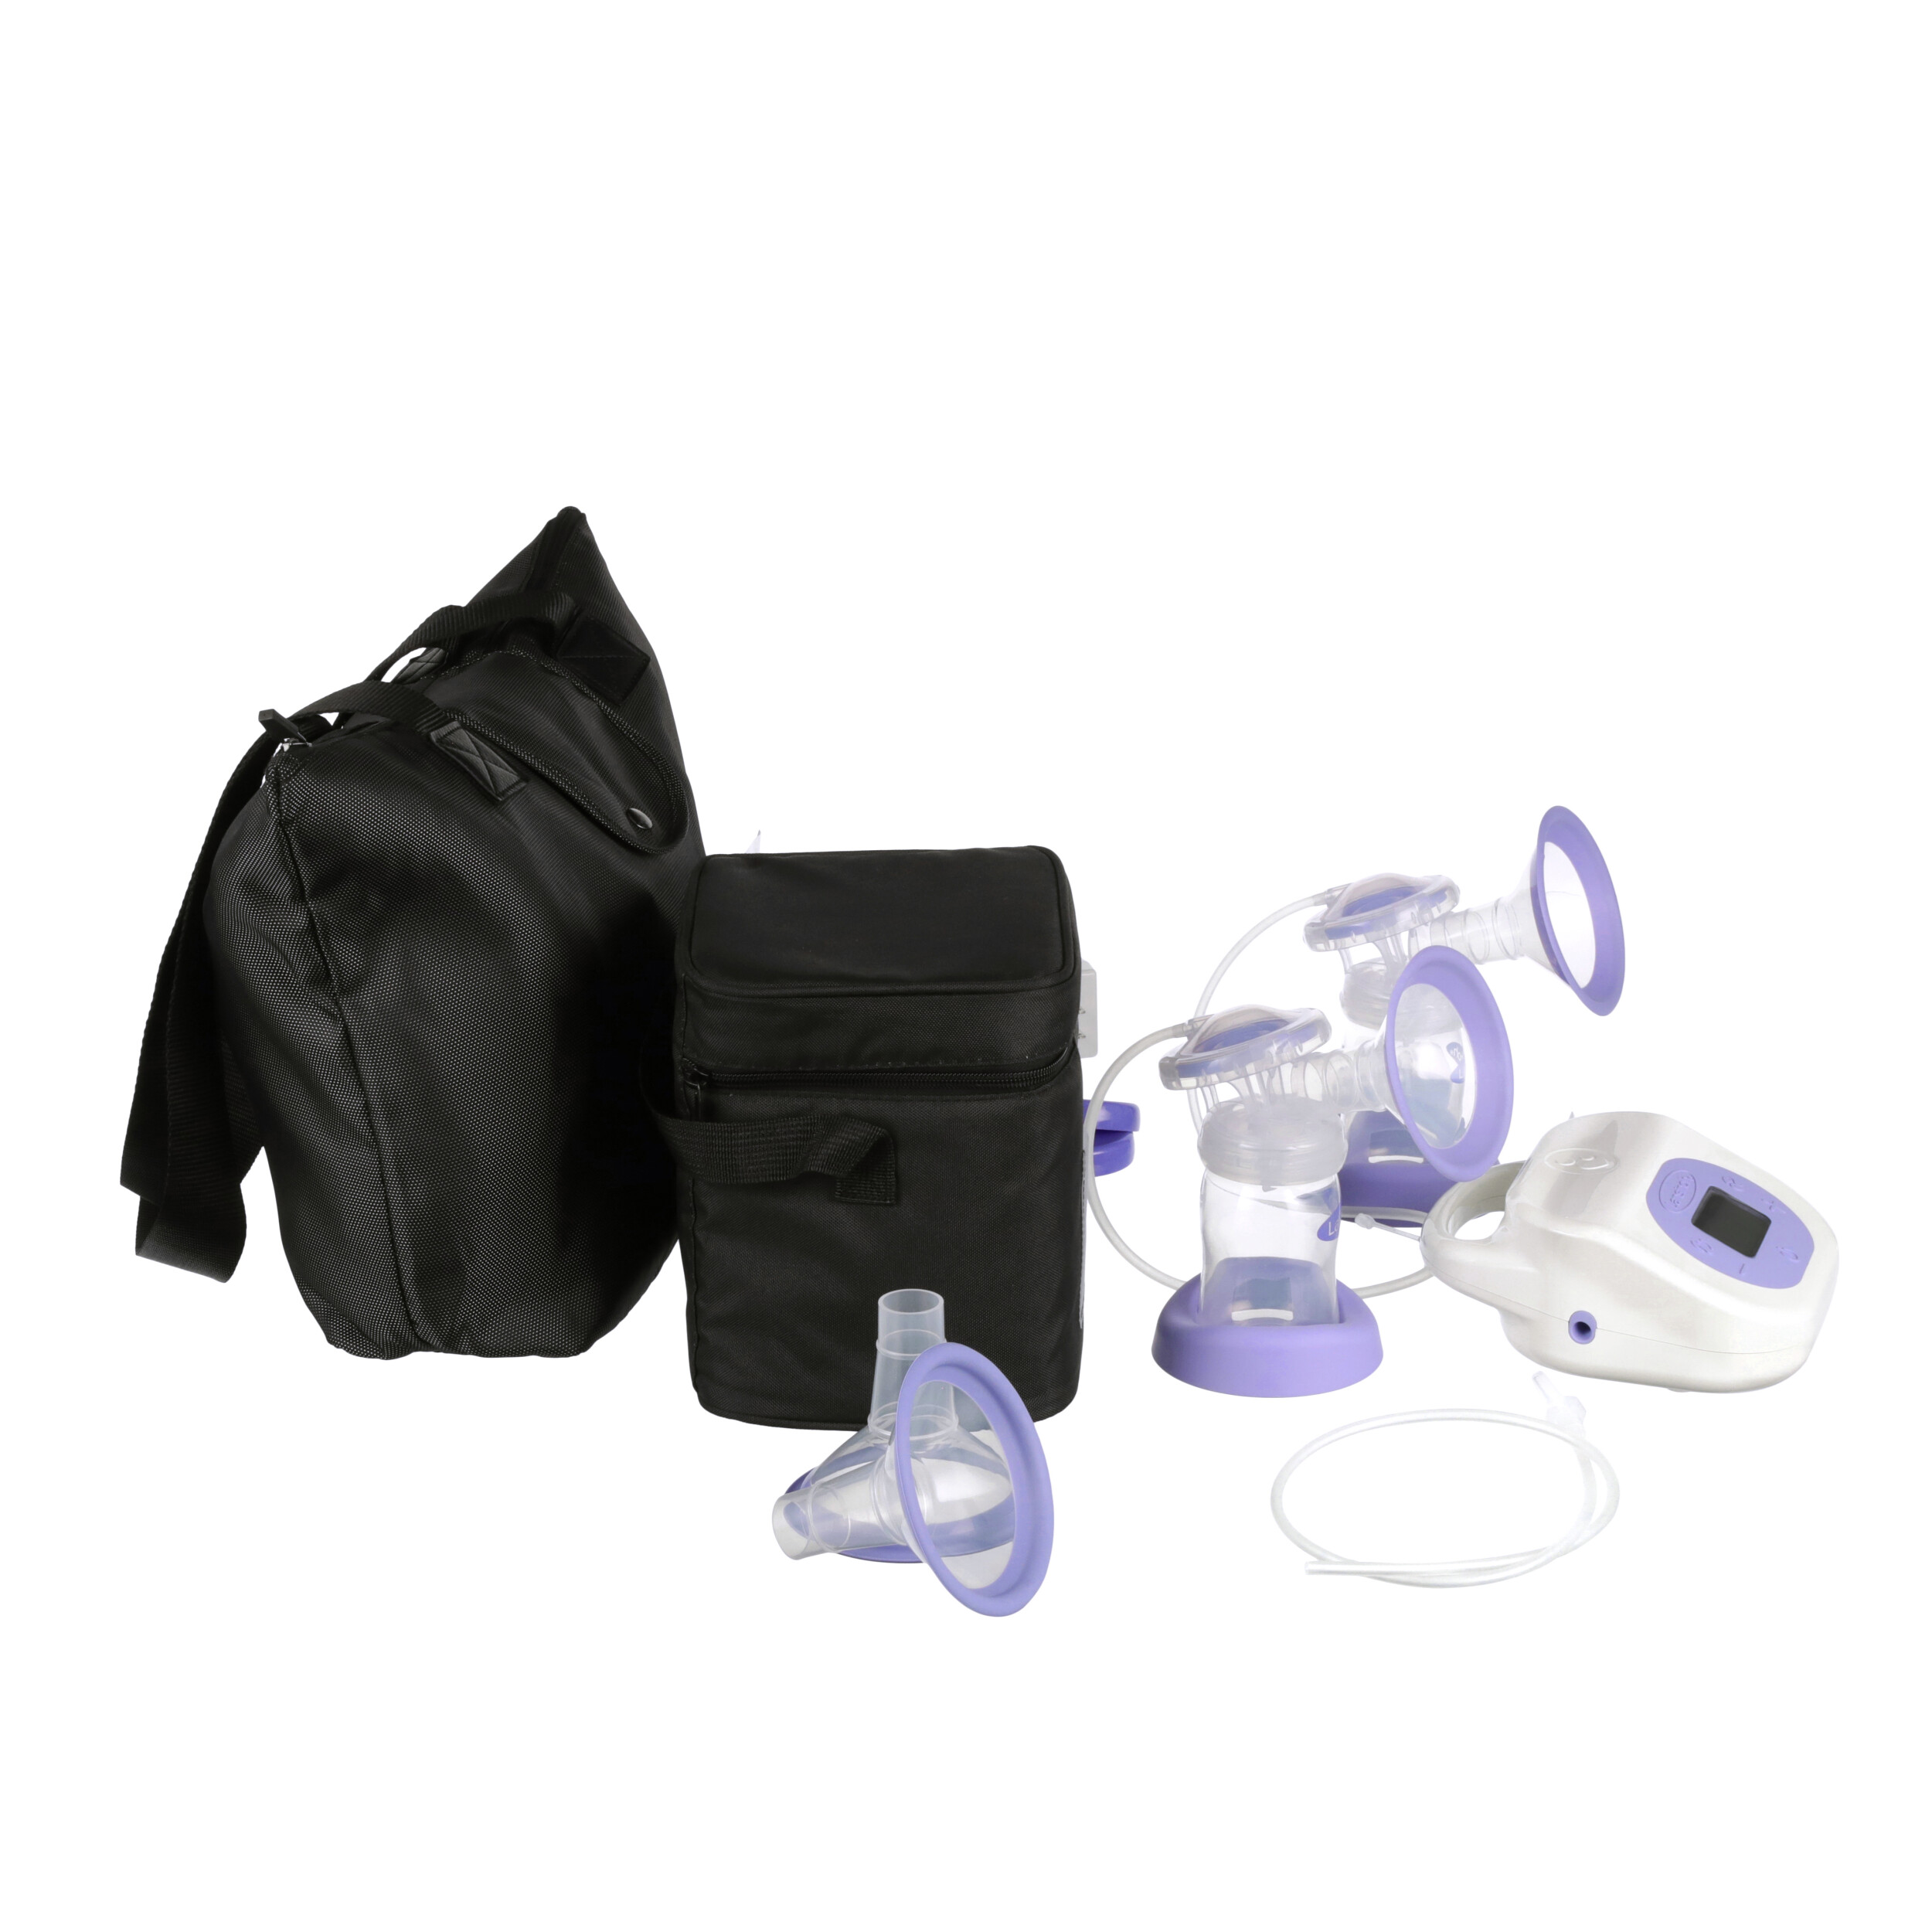 Lansinoh Smartpump 2.0 Double Electric Breast Pump Kit